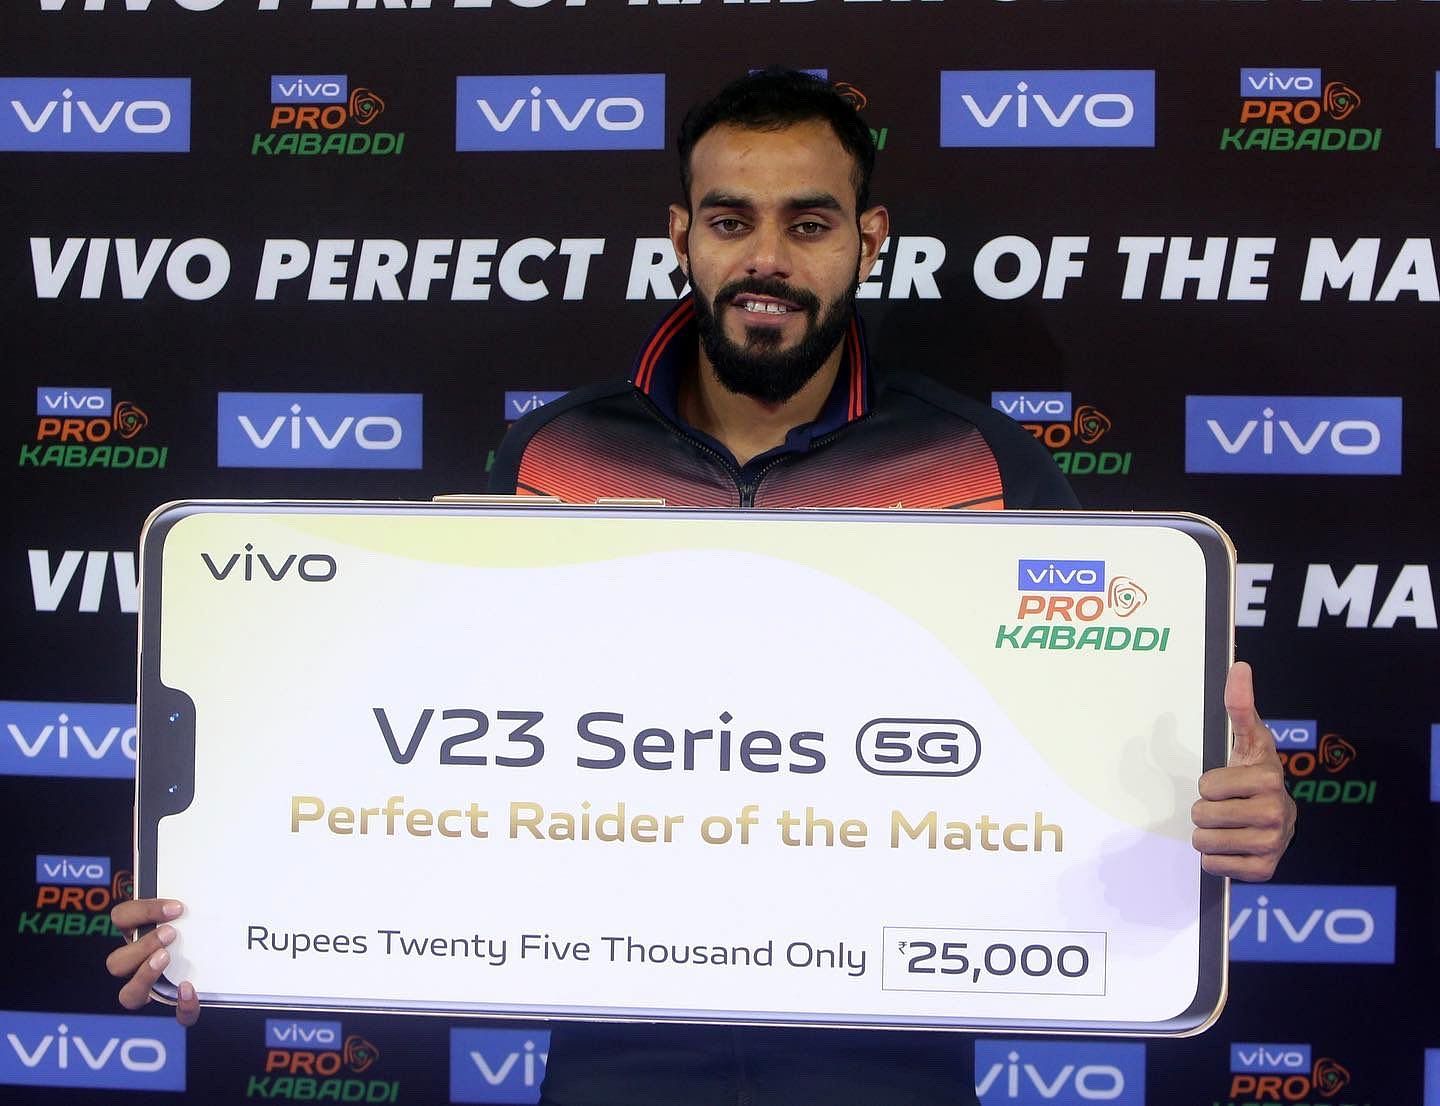 U Mumba player Abhishek Singh with the Best Raider of the Match award - Image Courtesy: U Mumba Twitter